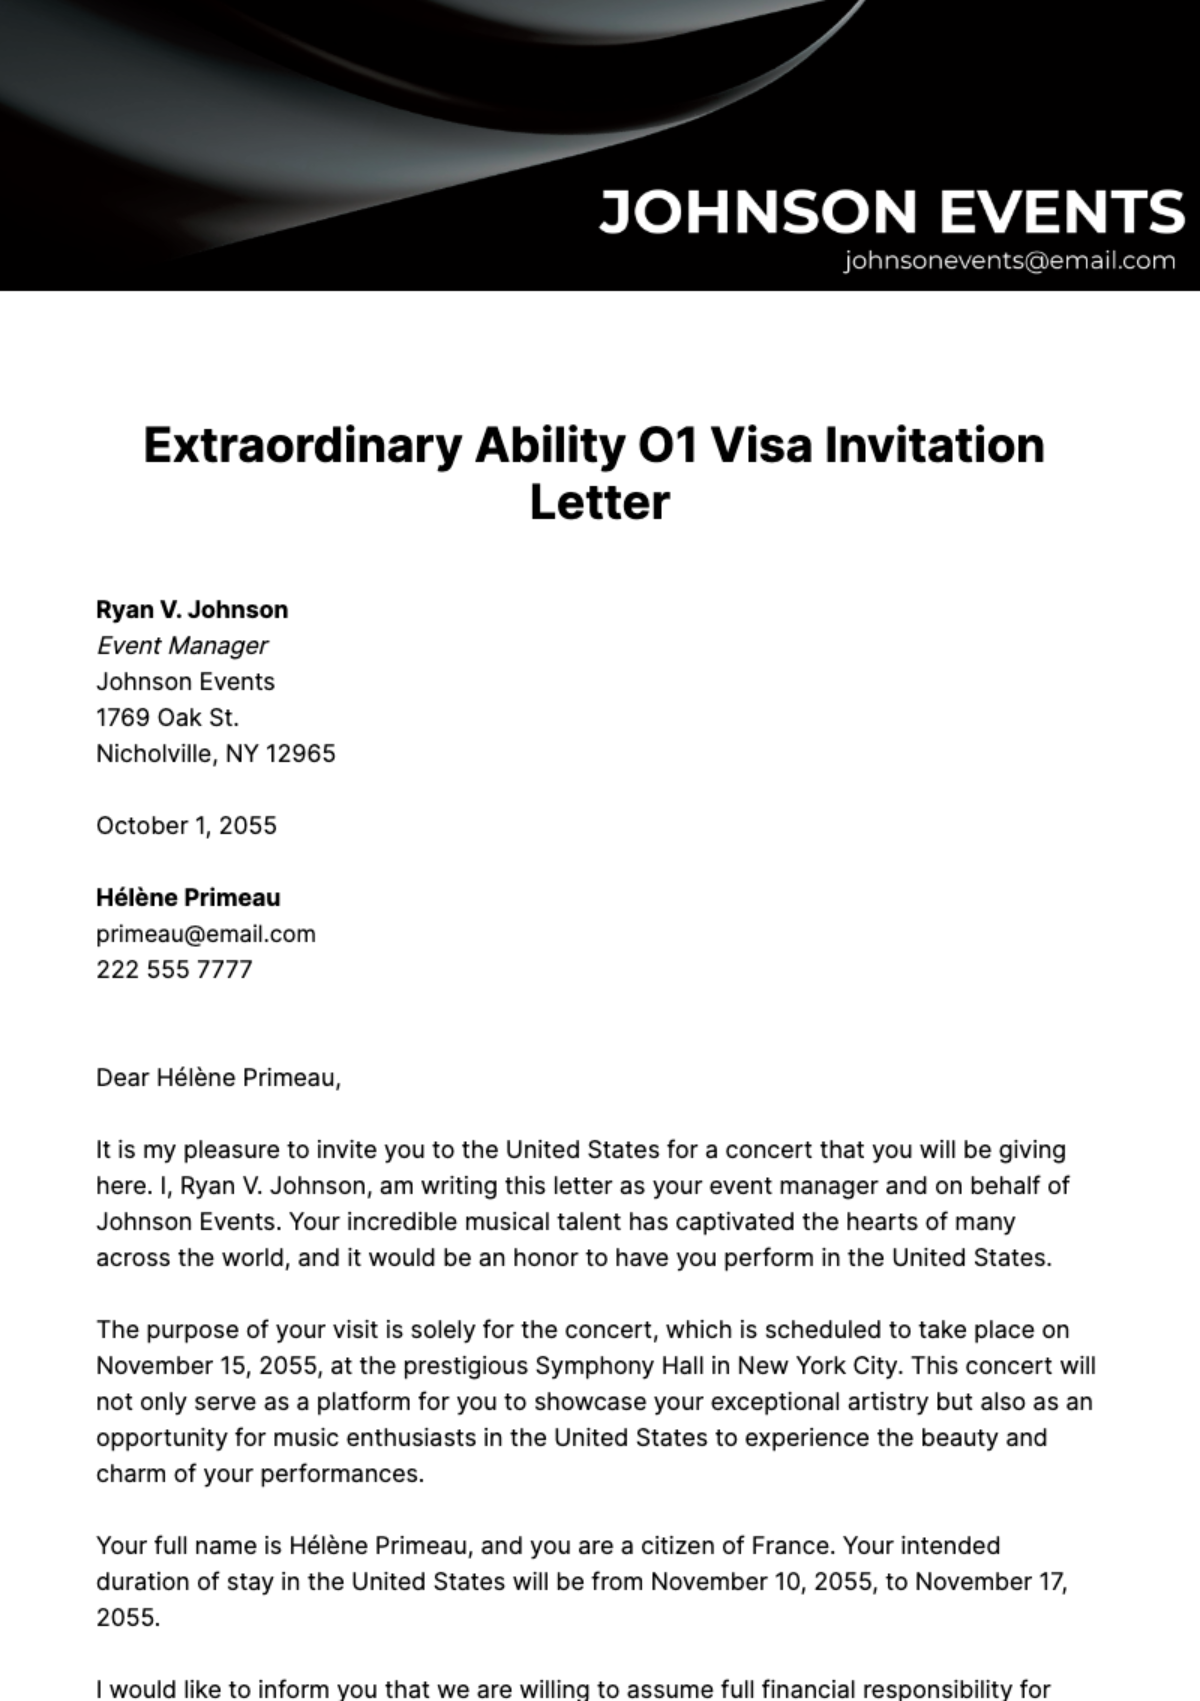 Extraordinary Ability O1 Visa Invitation Letter Template